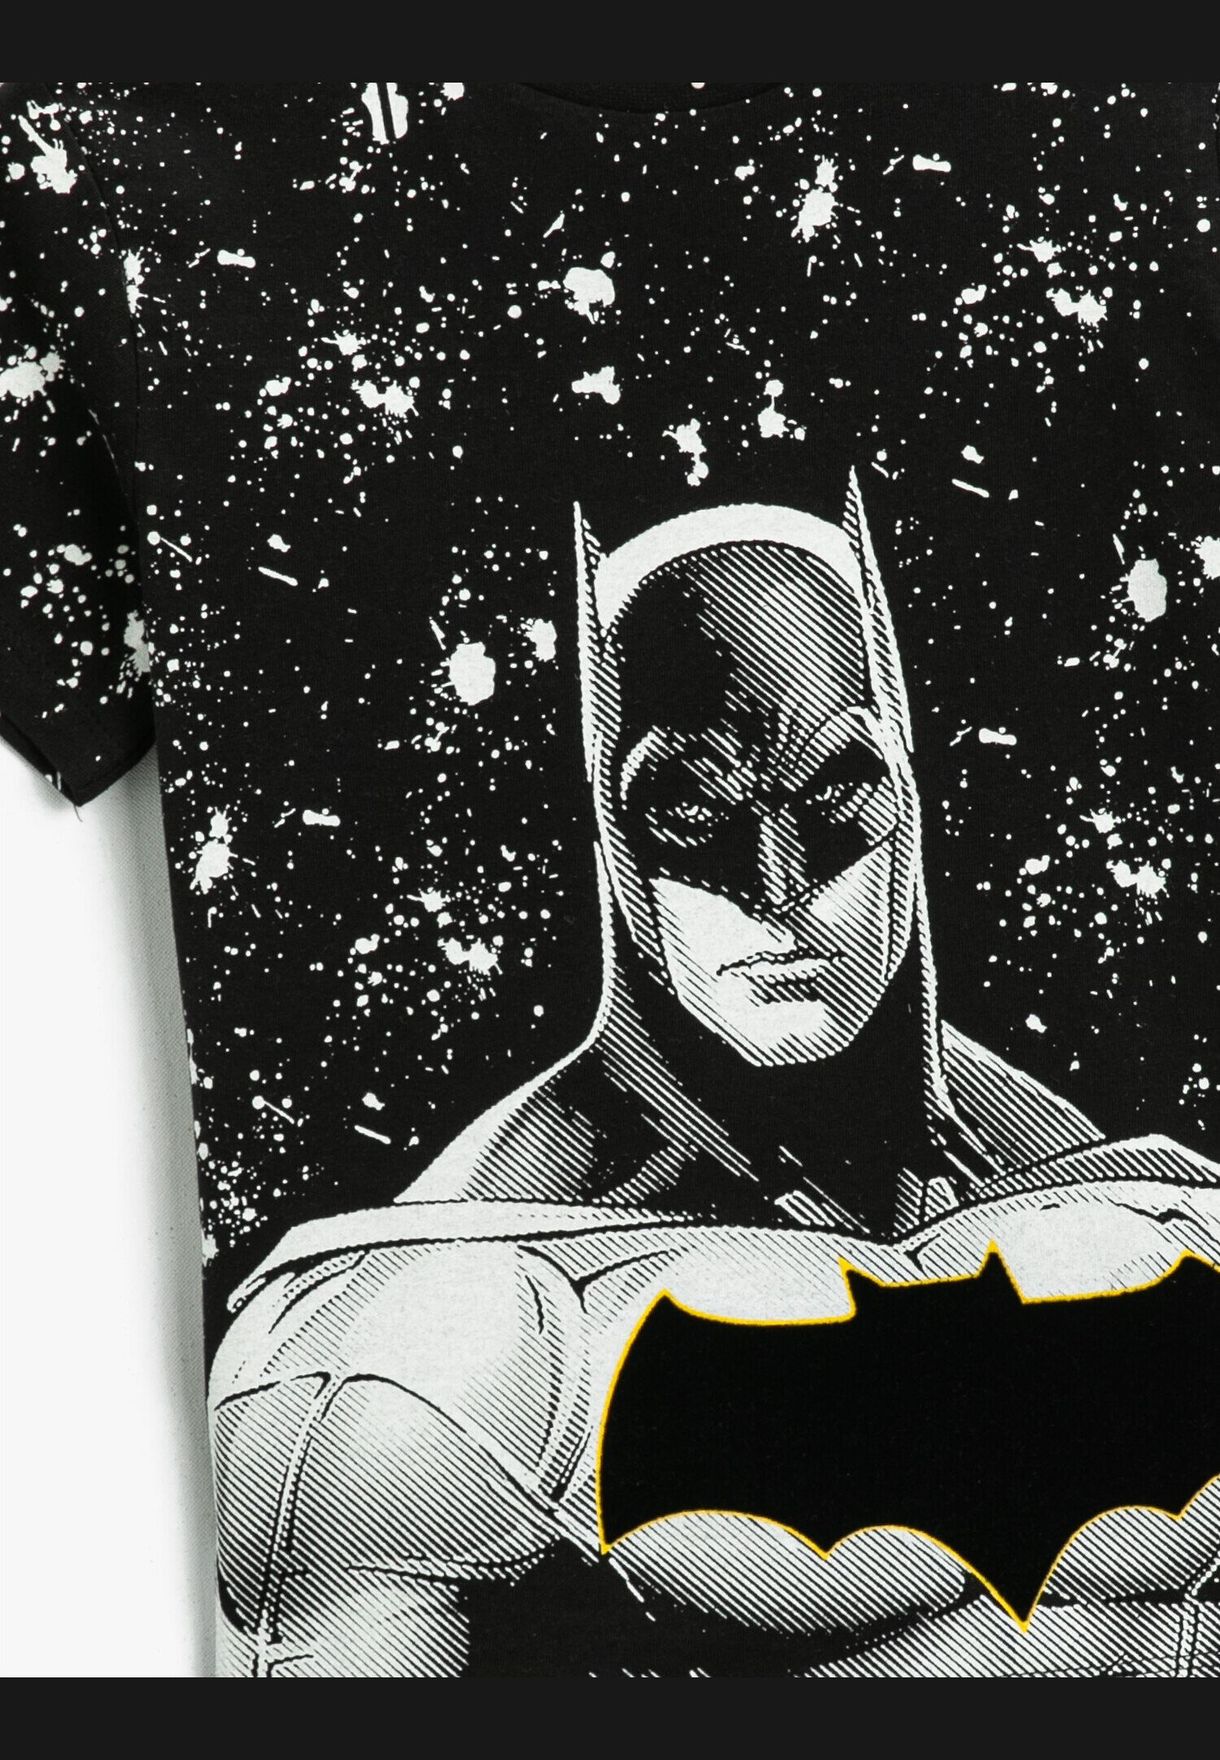 Batman Licensed Printed Crew Neck Short Sleeve Cotton T-Shirt.